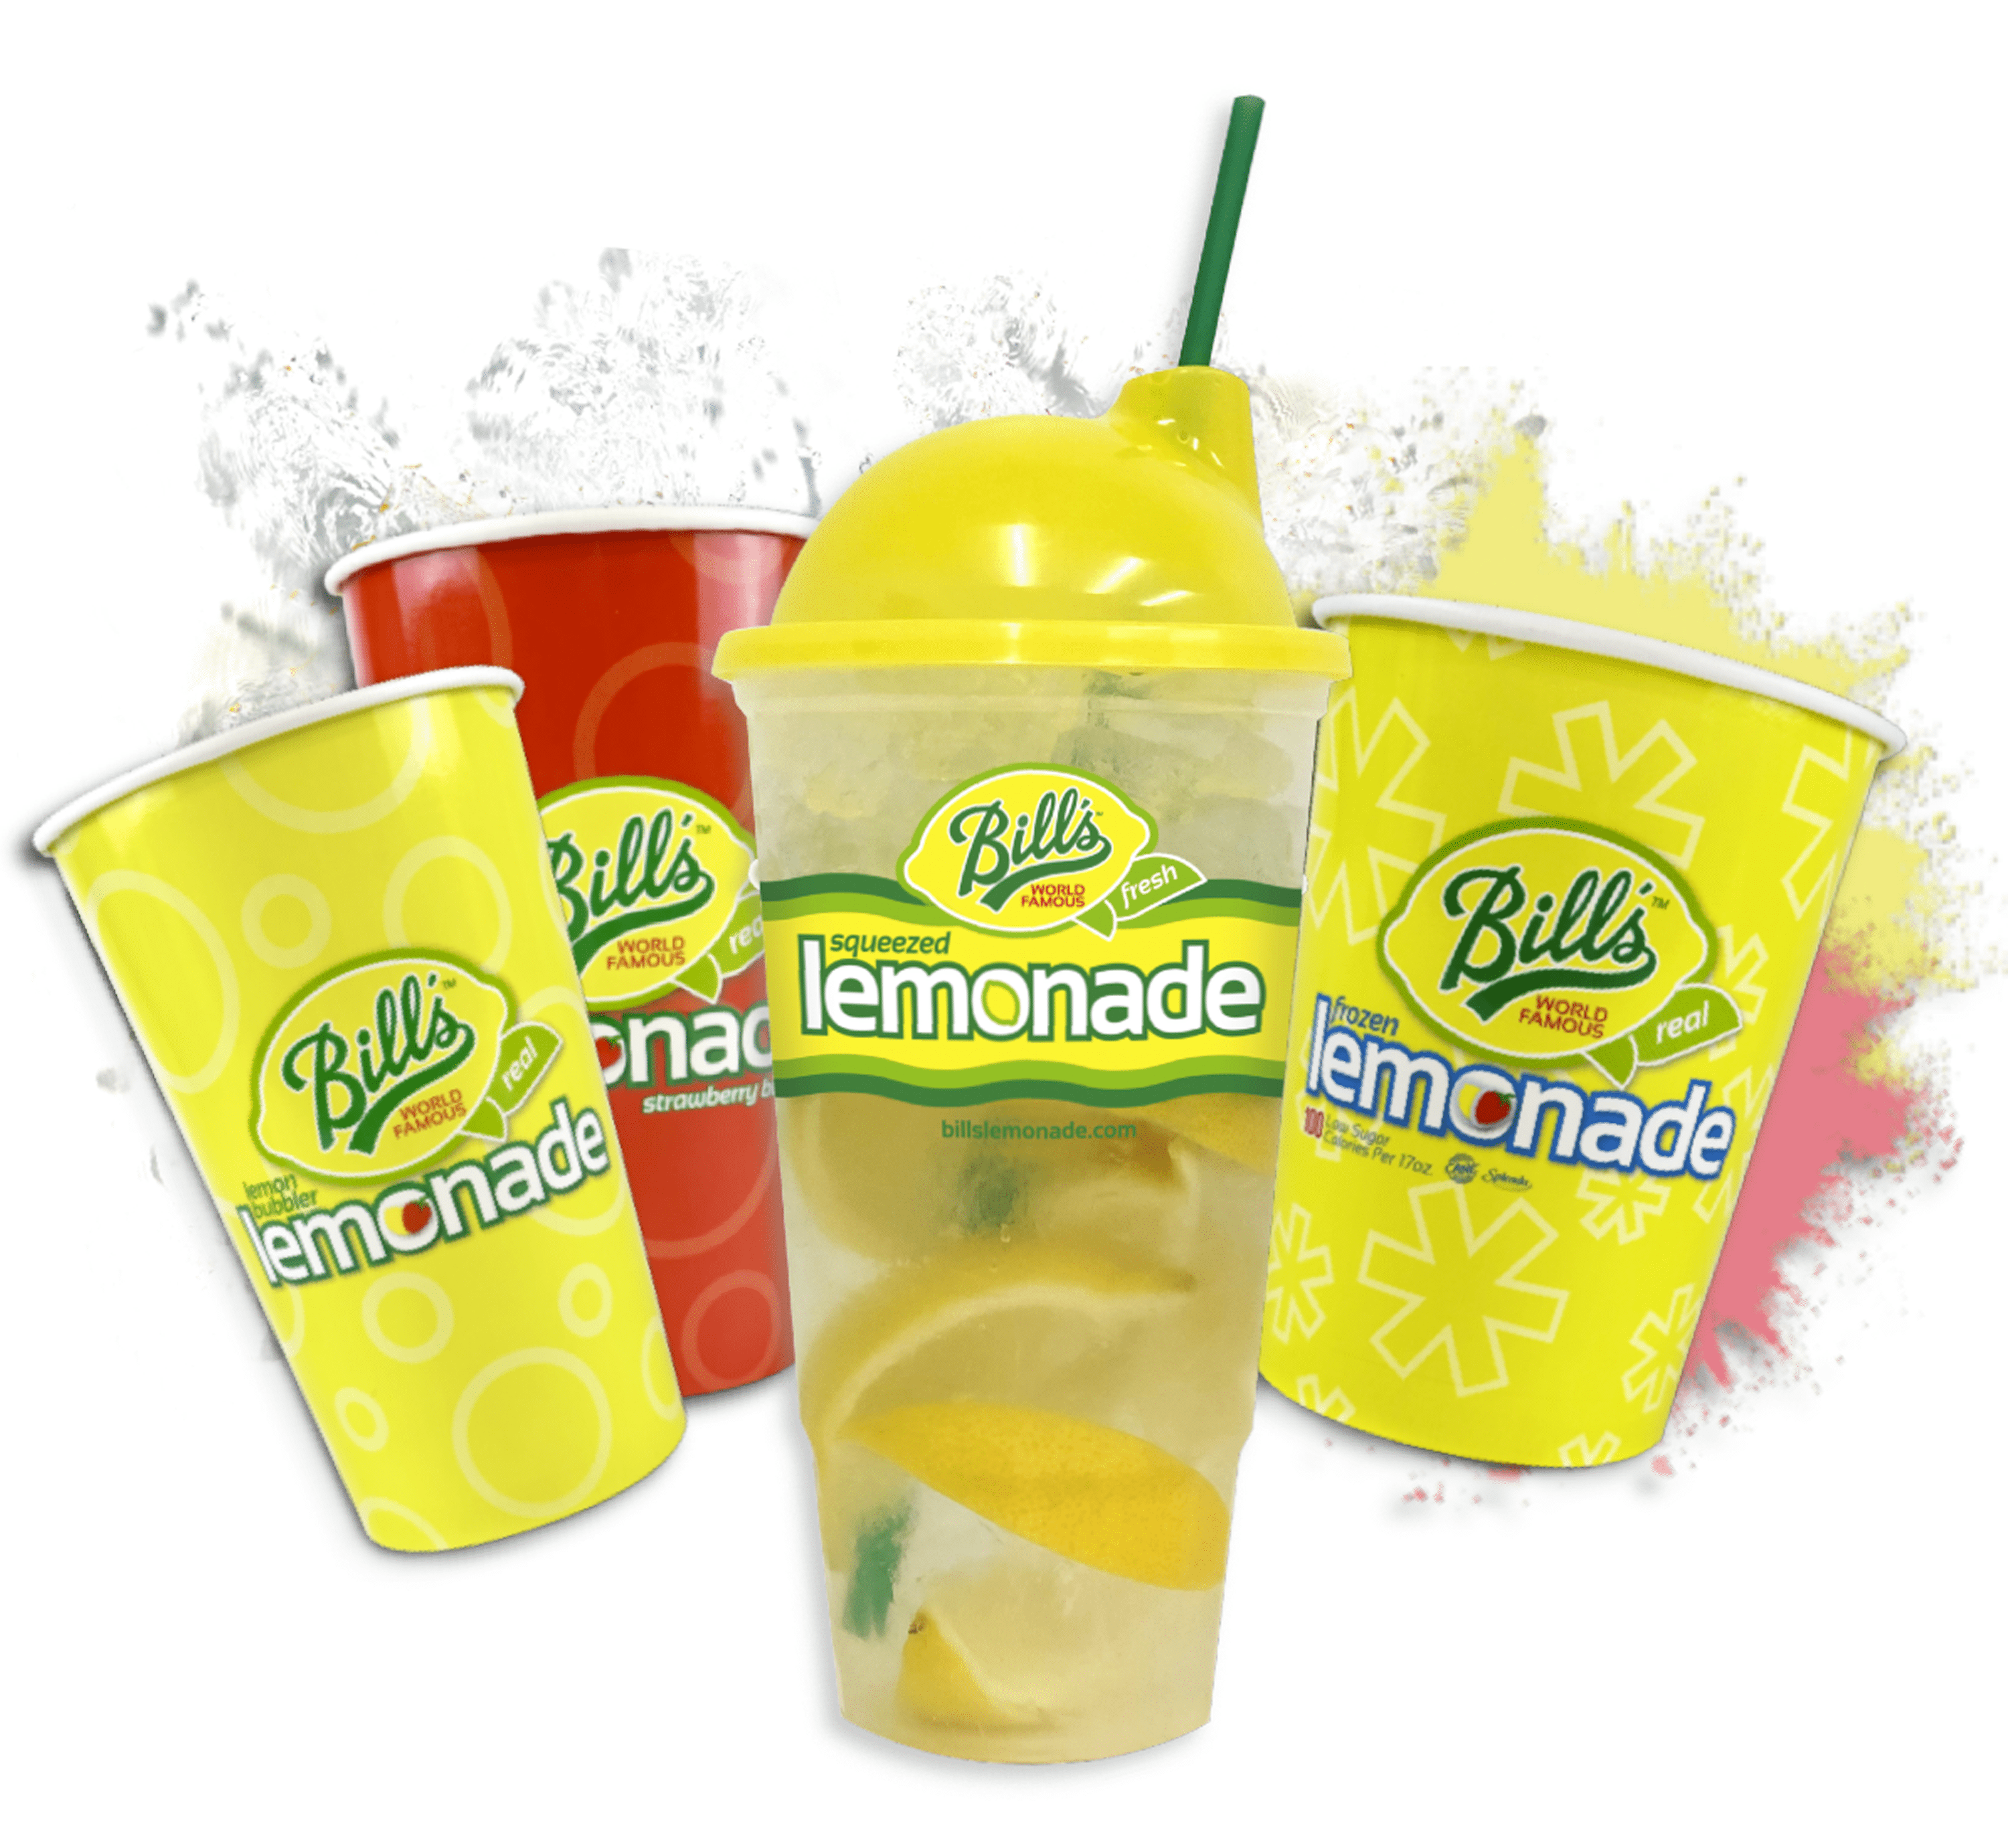 Bills Lemonade products